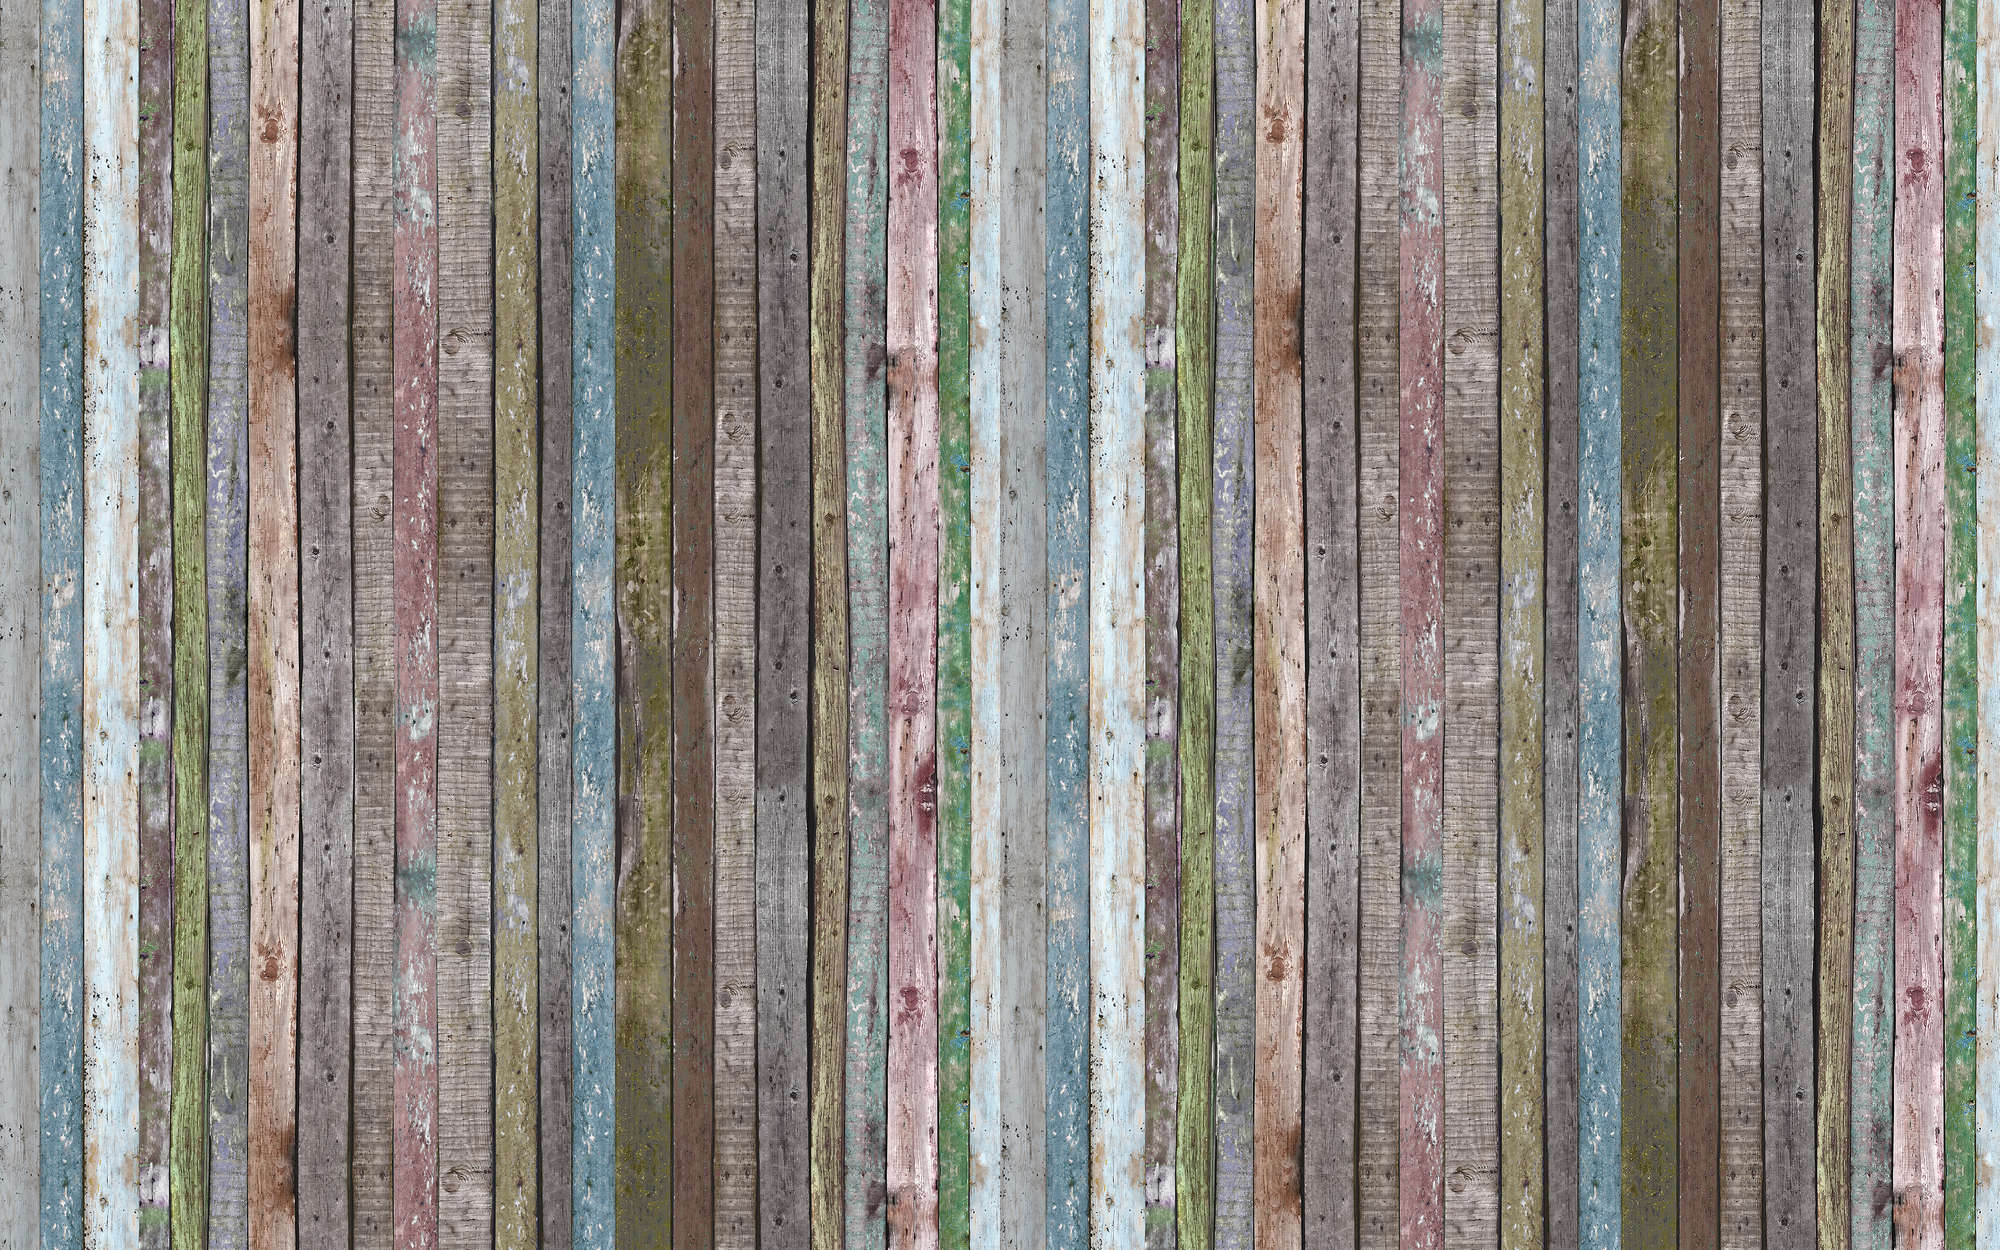             Wooden Striped Beams Wallpaper - Textured Non-woven
        